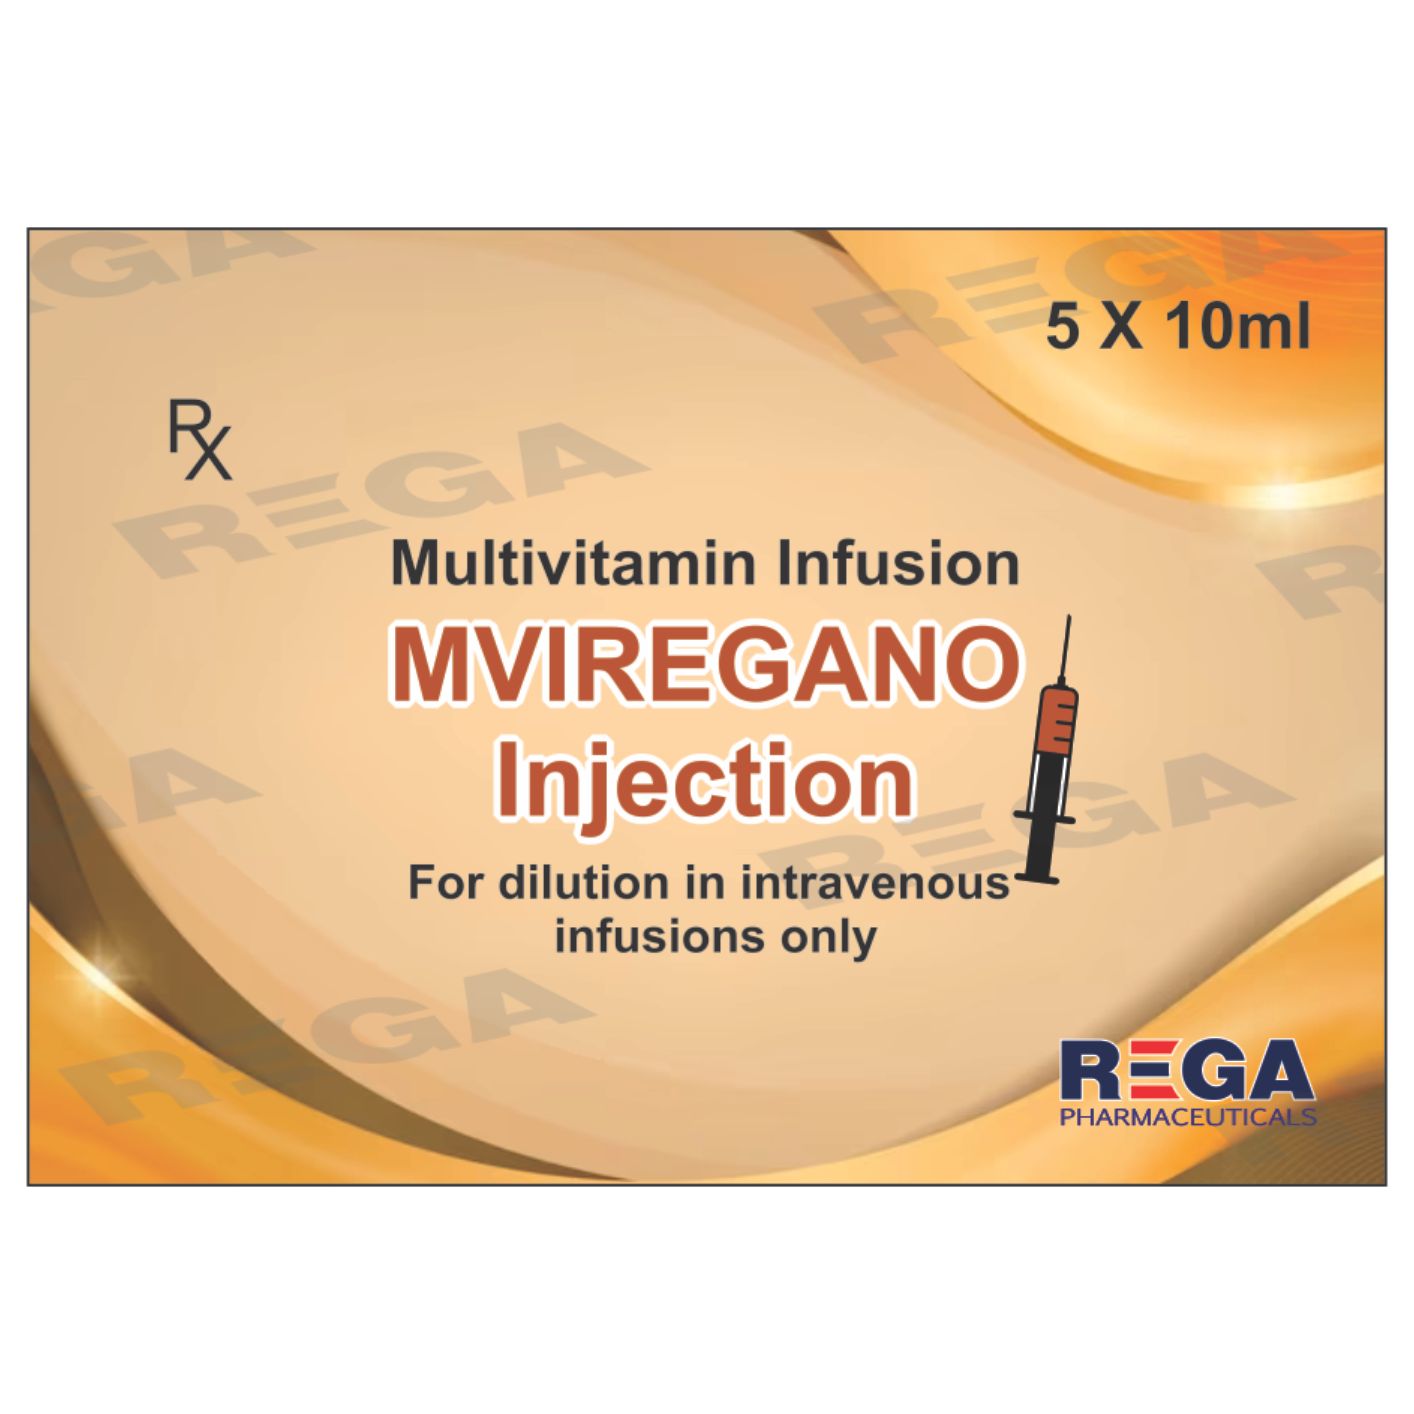 Multivitamin for parenteral use